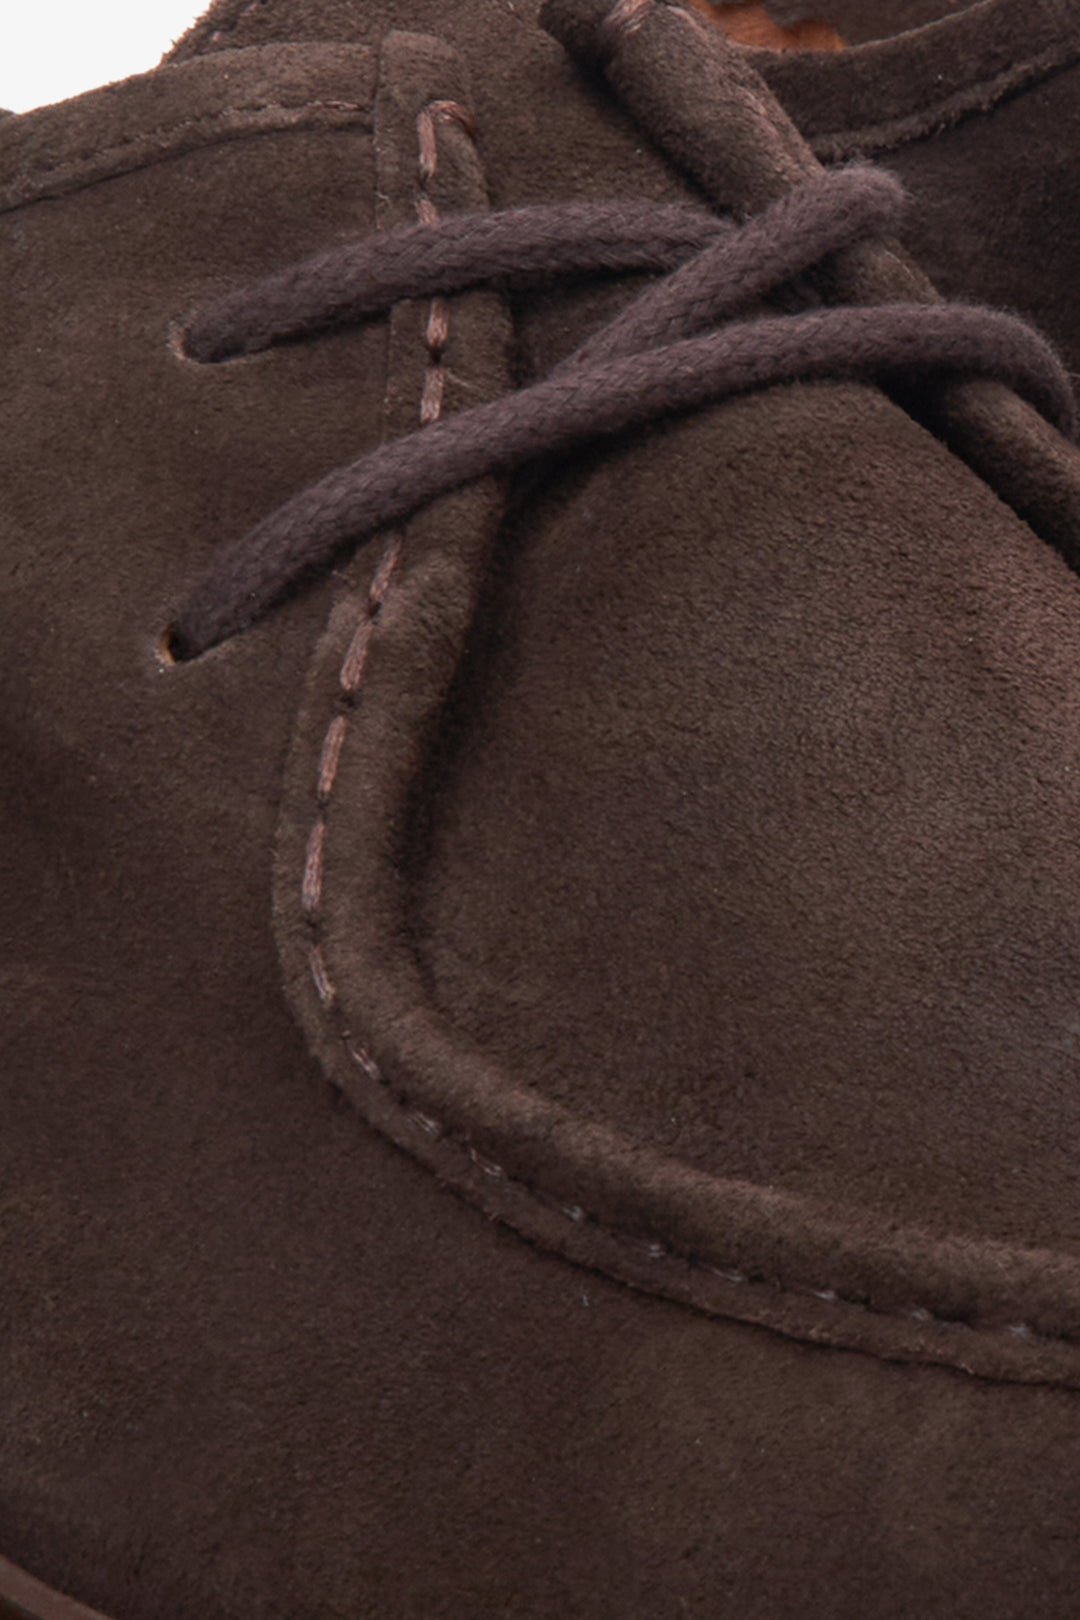 Men's dark brown lace-up shoes by Estro - close-up on details